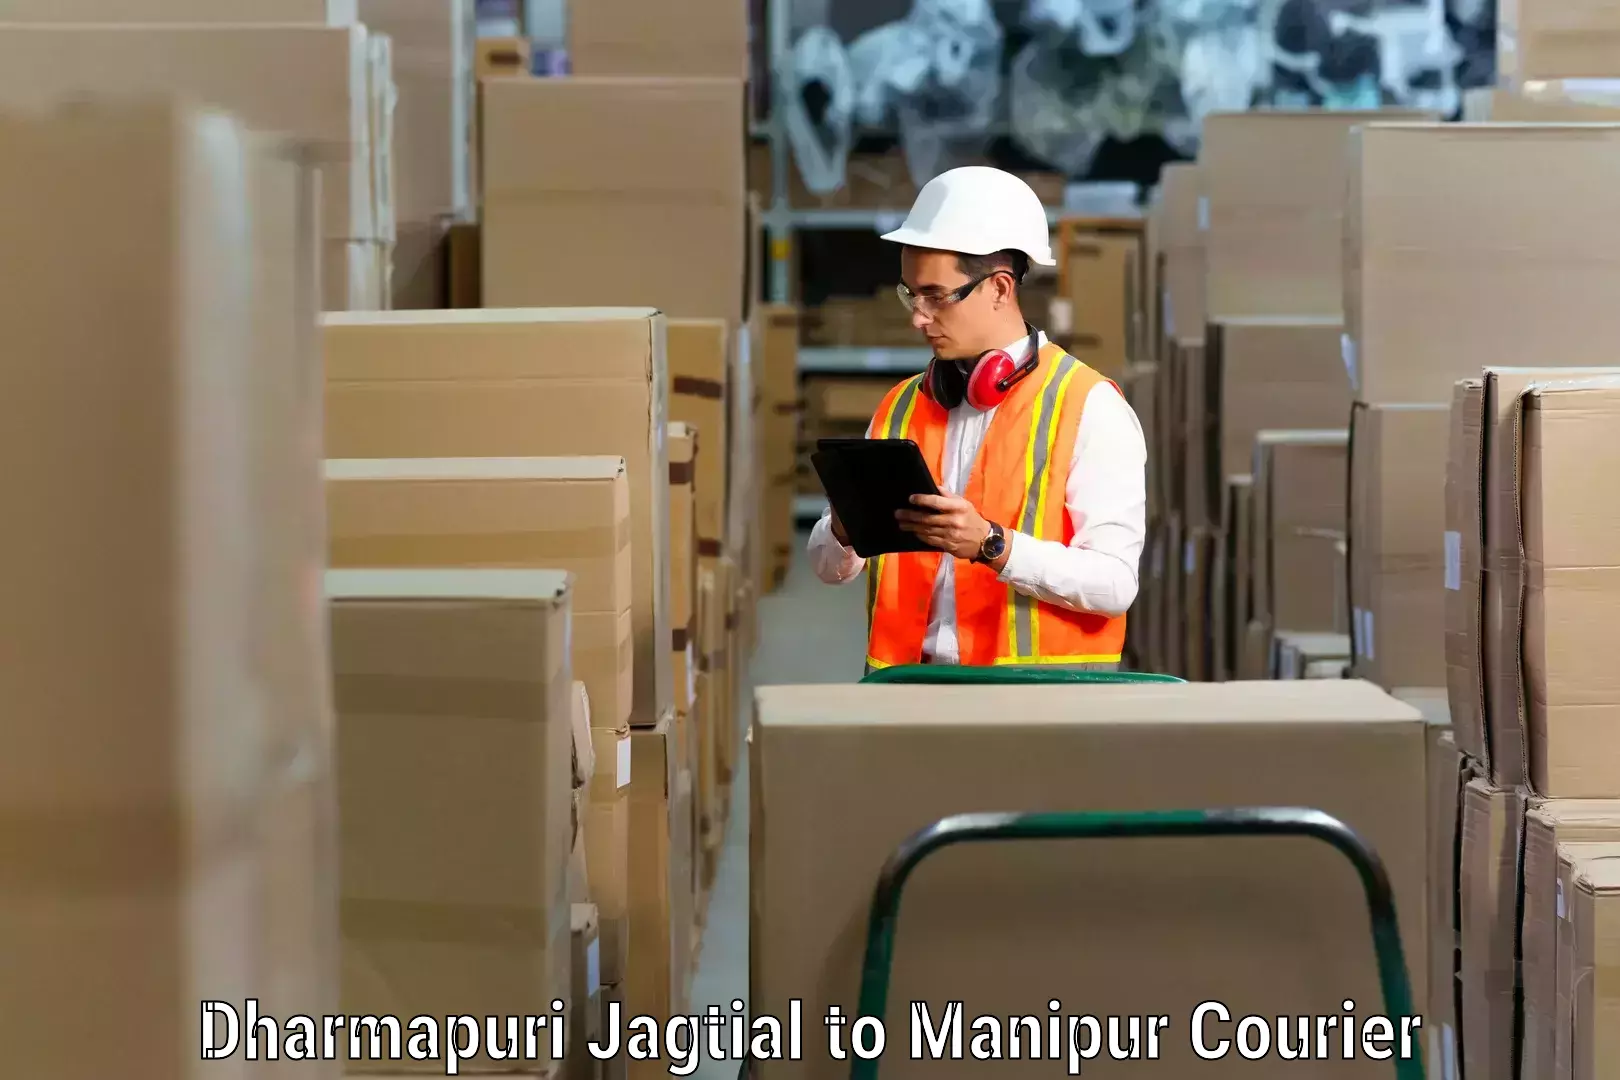 Professional packing services Dharmapuri Jagtial to Manipur